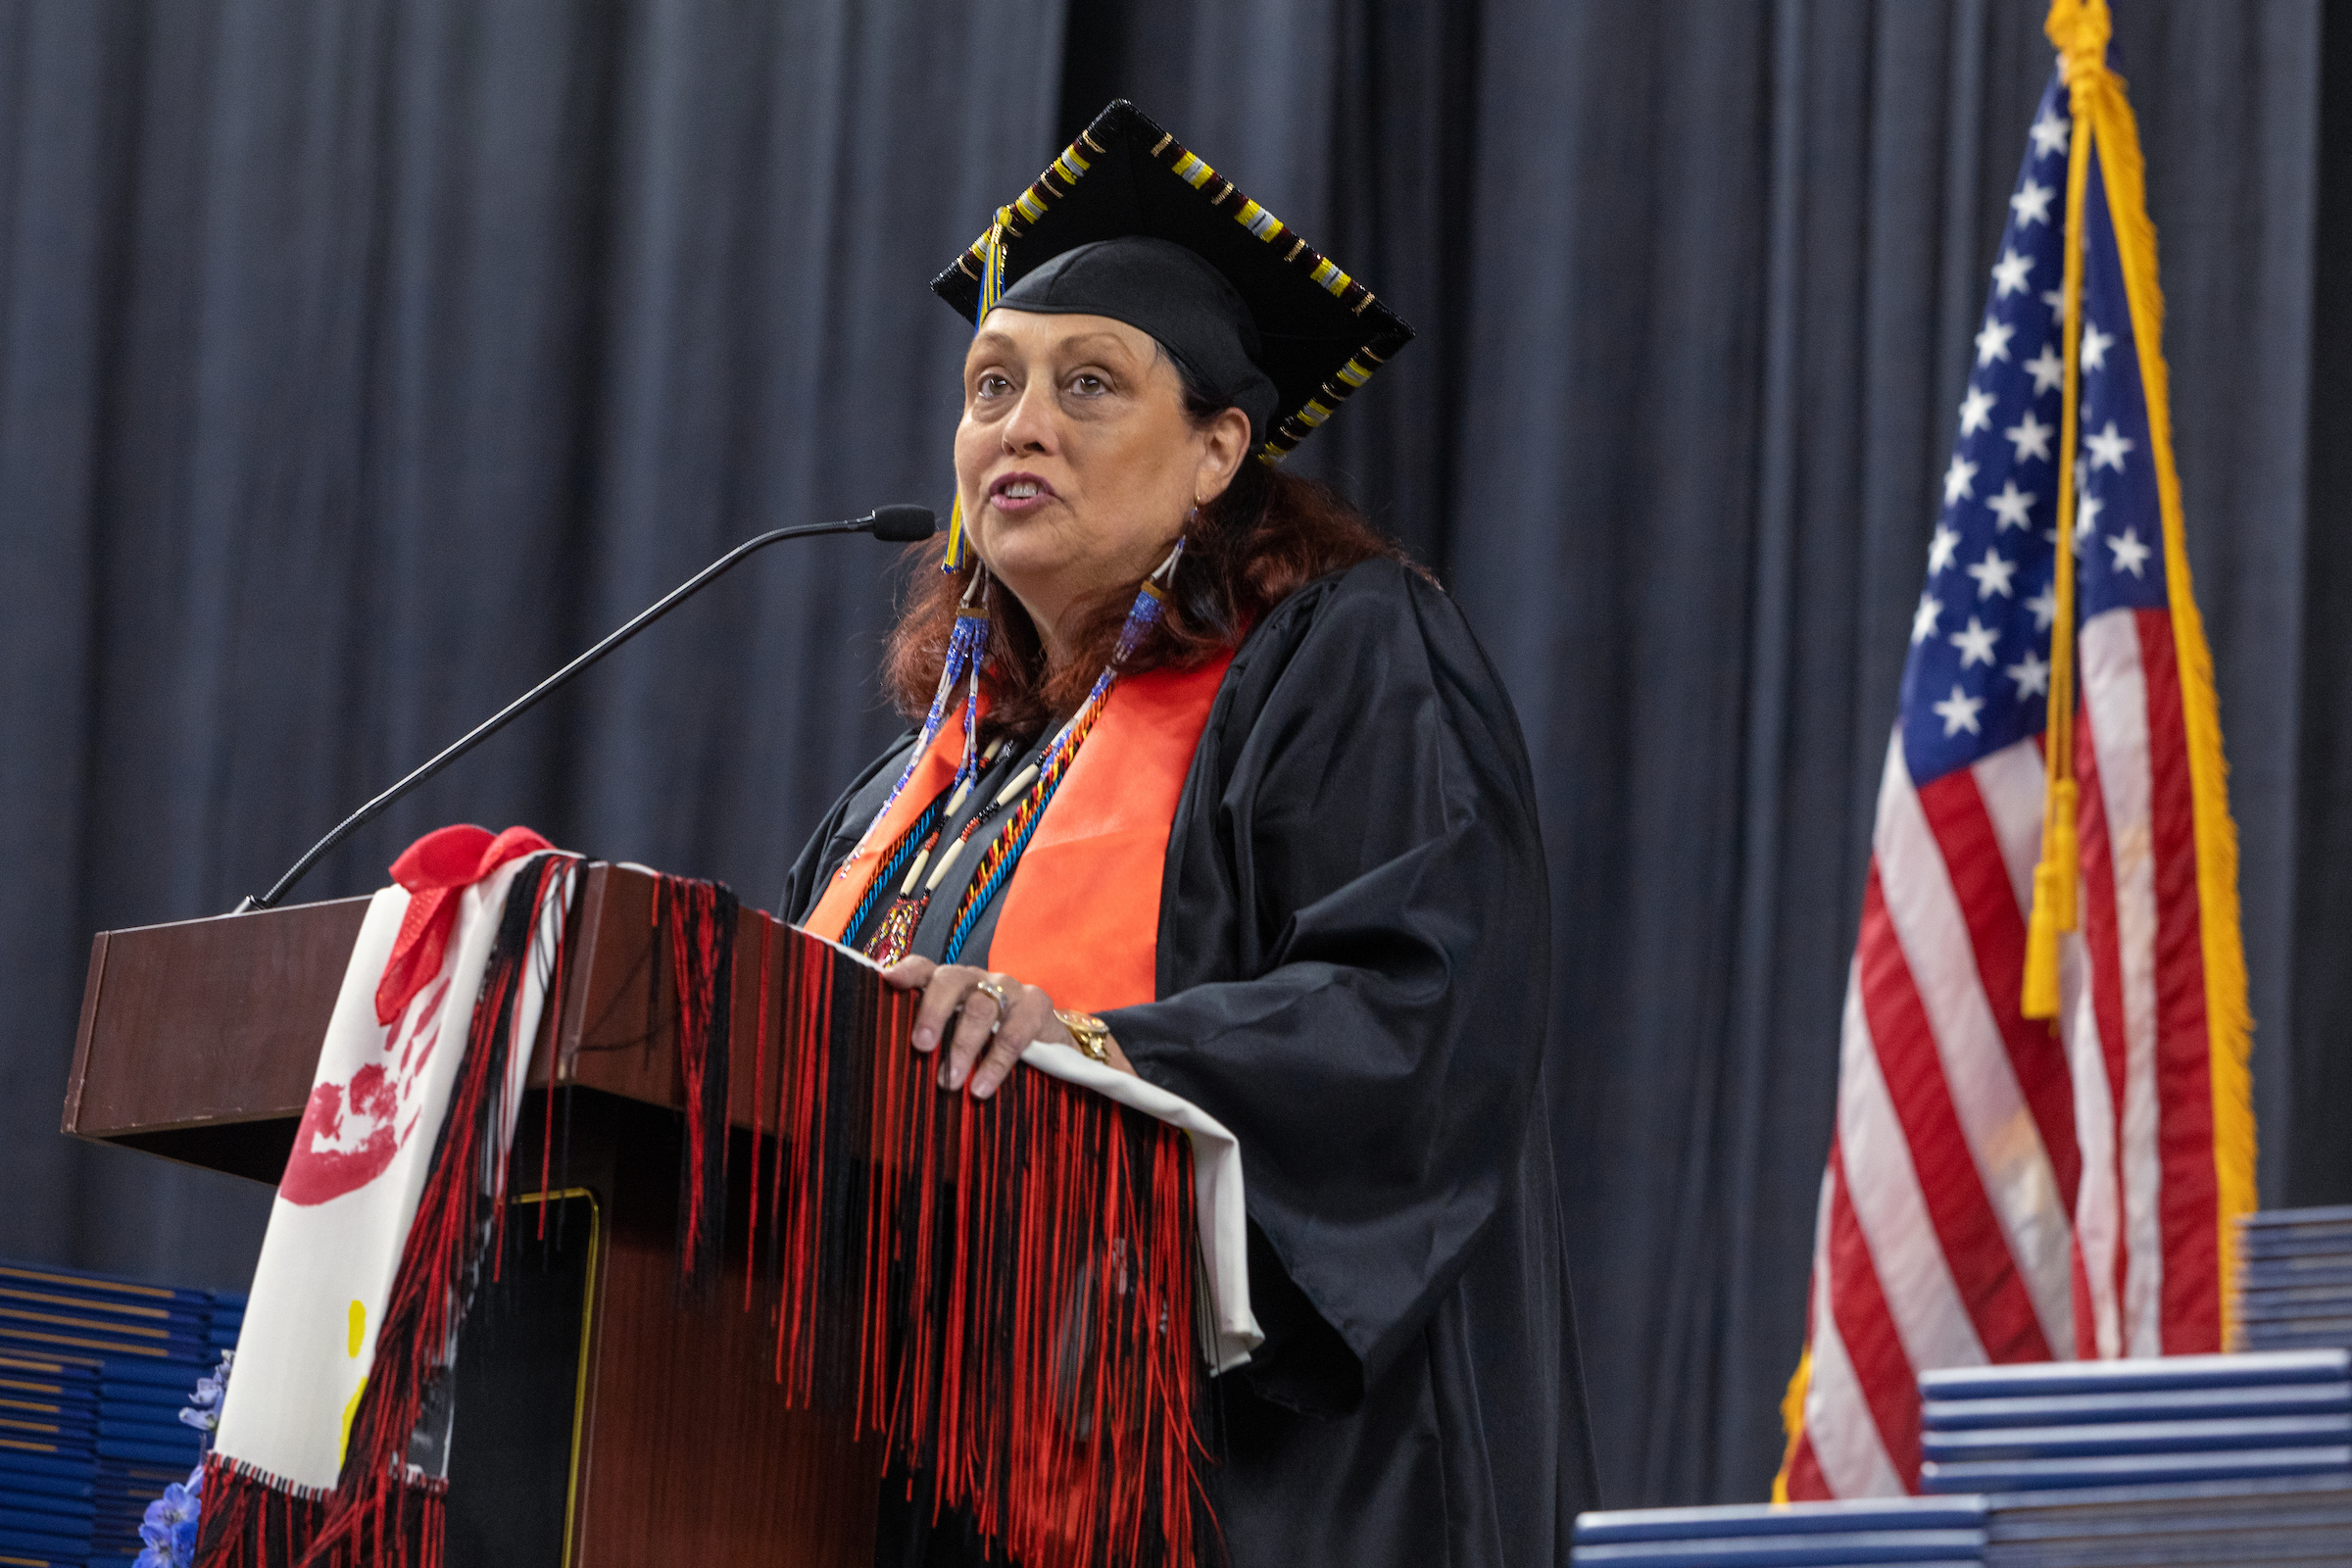 A woman in university regalia speaks at a podium